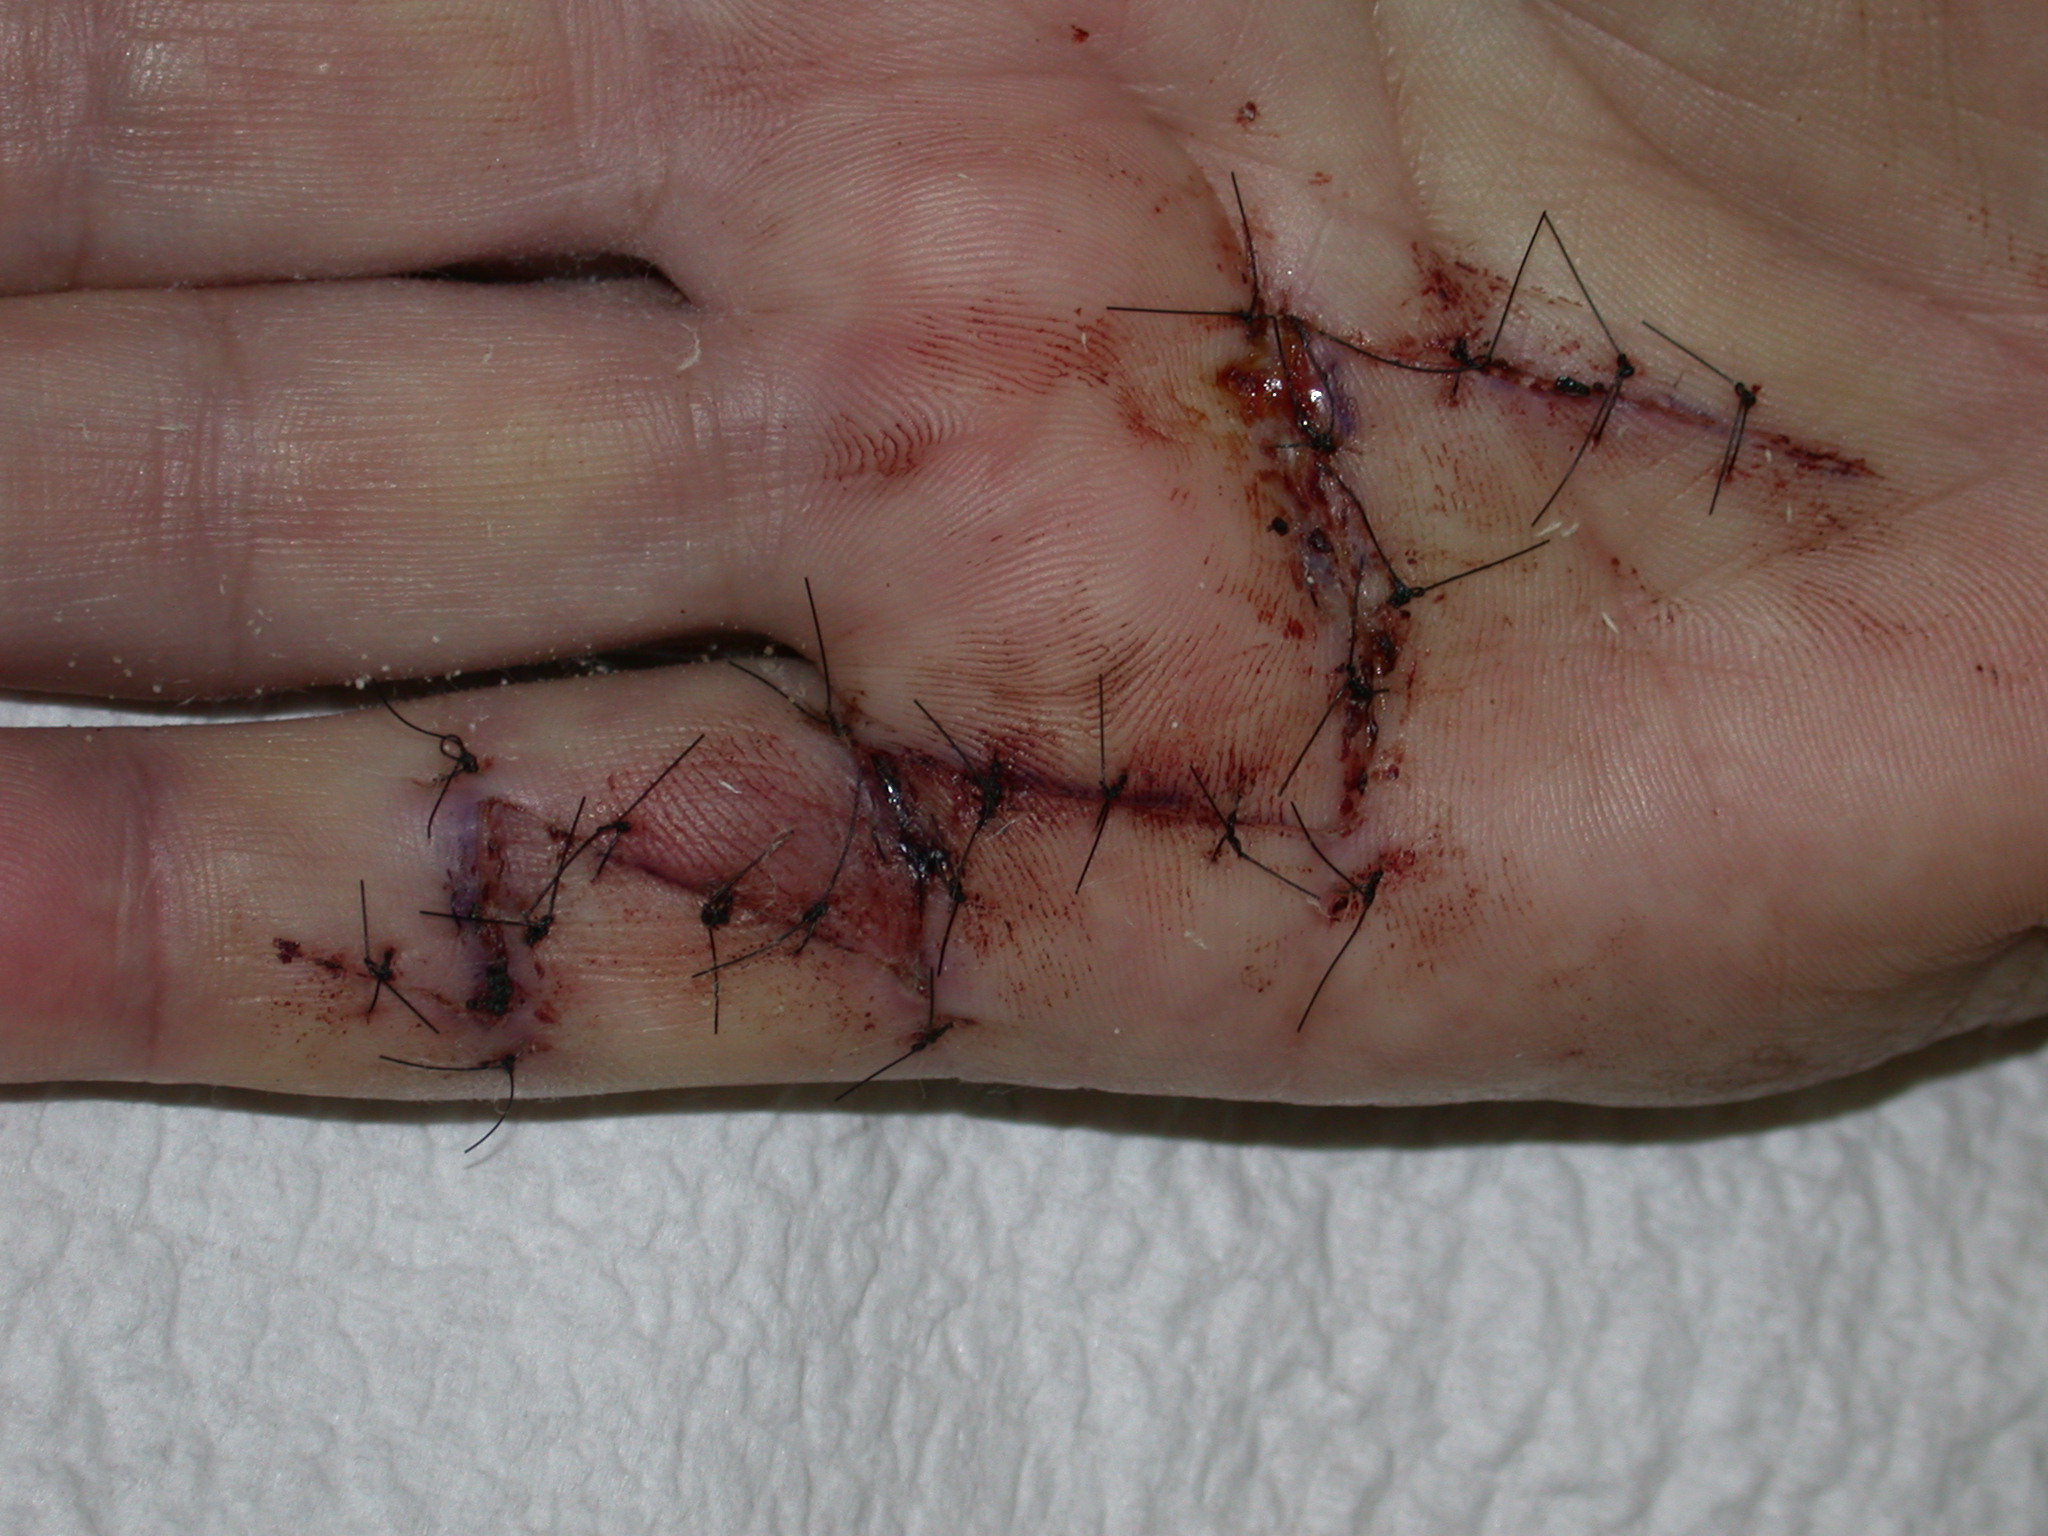 Figures 11b: The ÿãmodified Brunerÿâ incision with primary closure and follow-up at six weeks